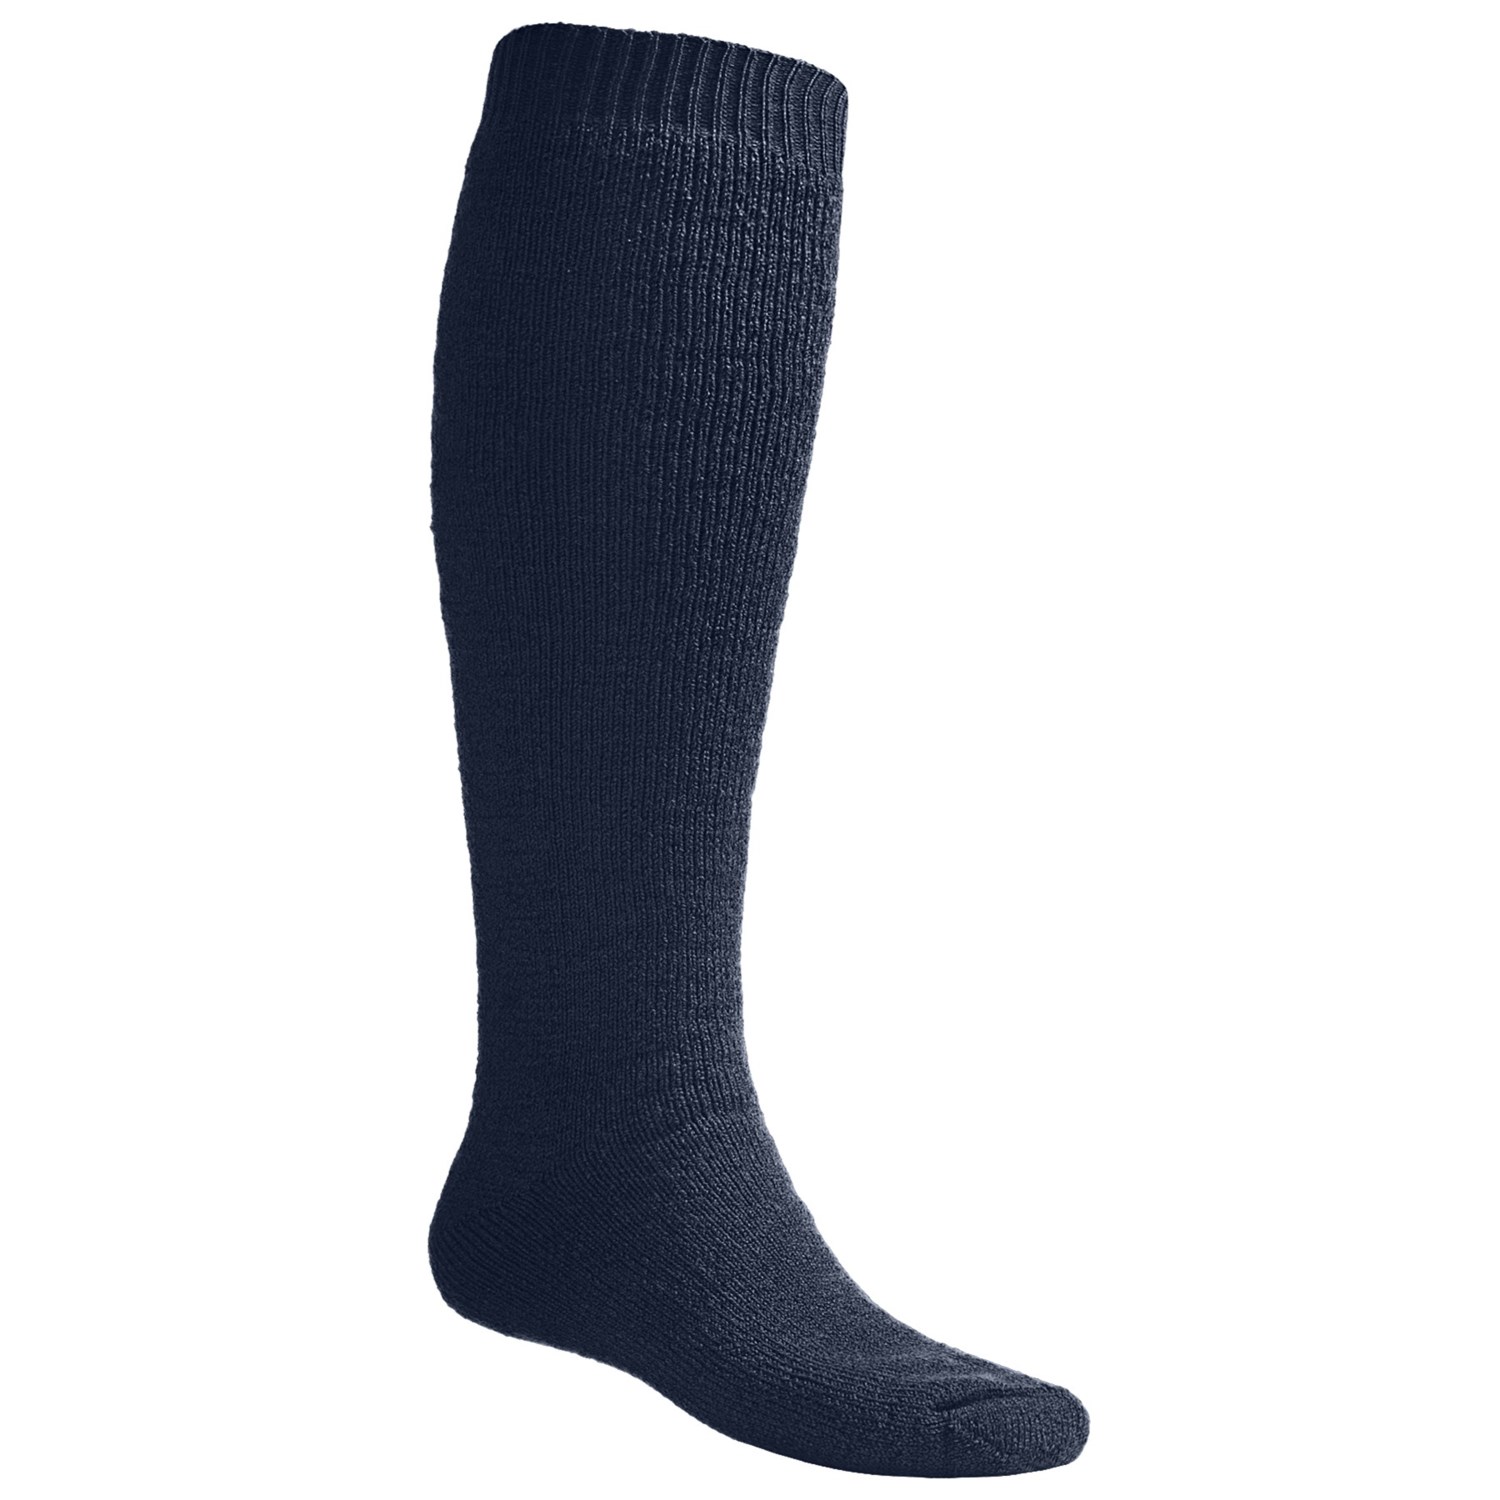  Premium Explorer Wool Hiking Knee Socks For Men and Women  Save 36%